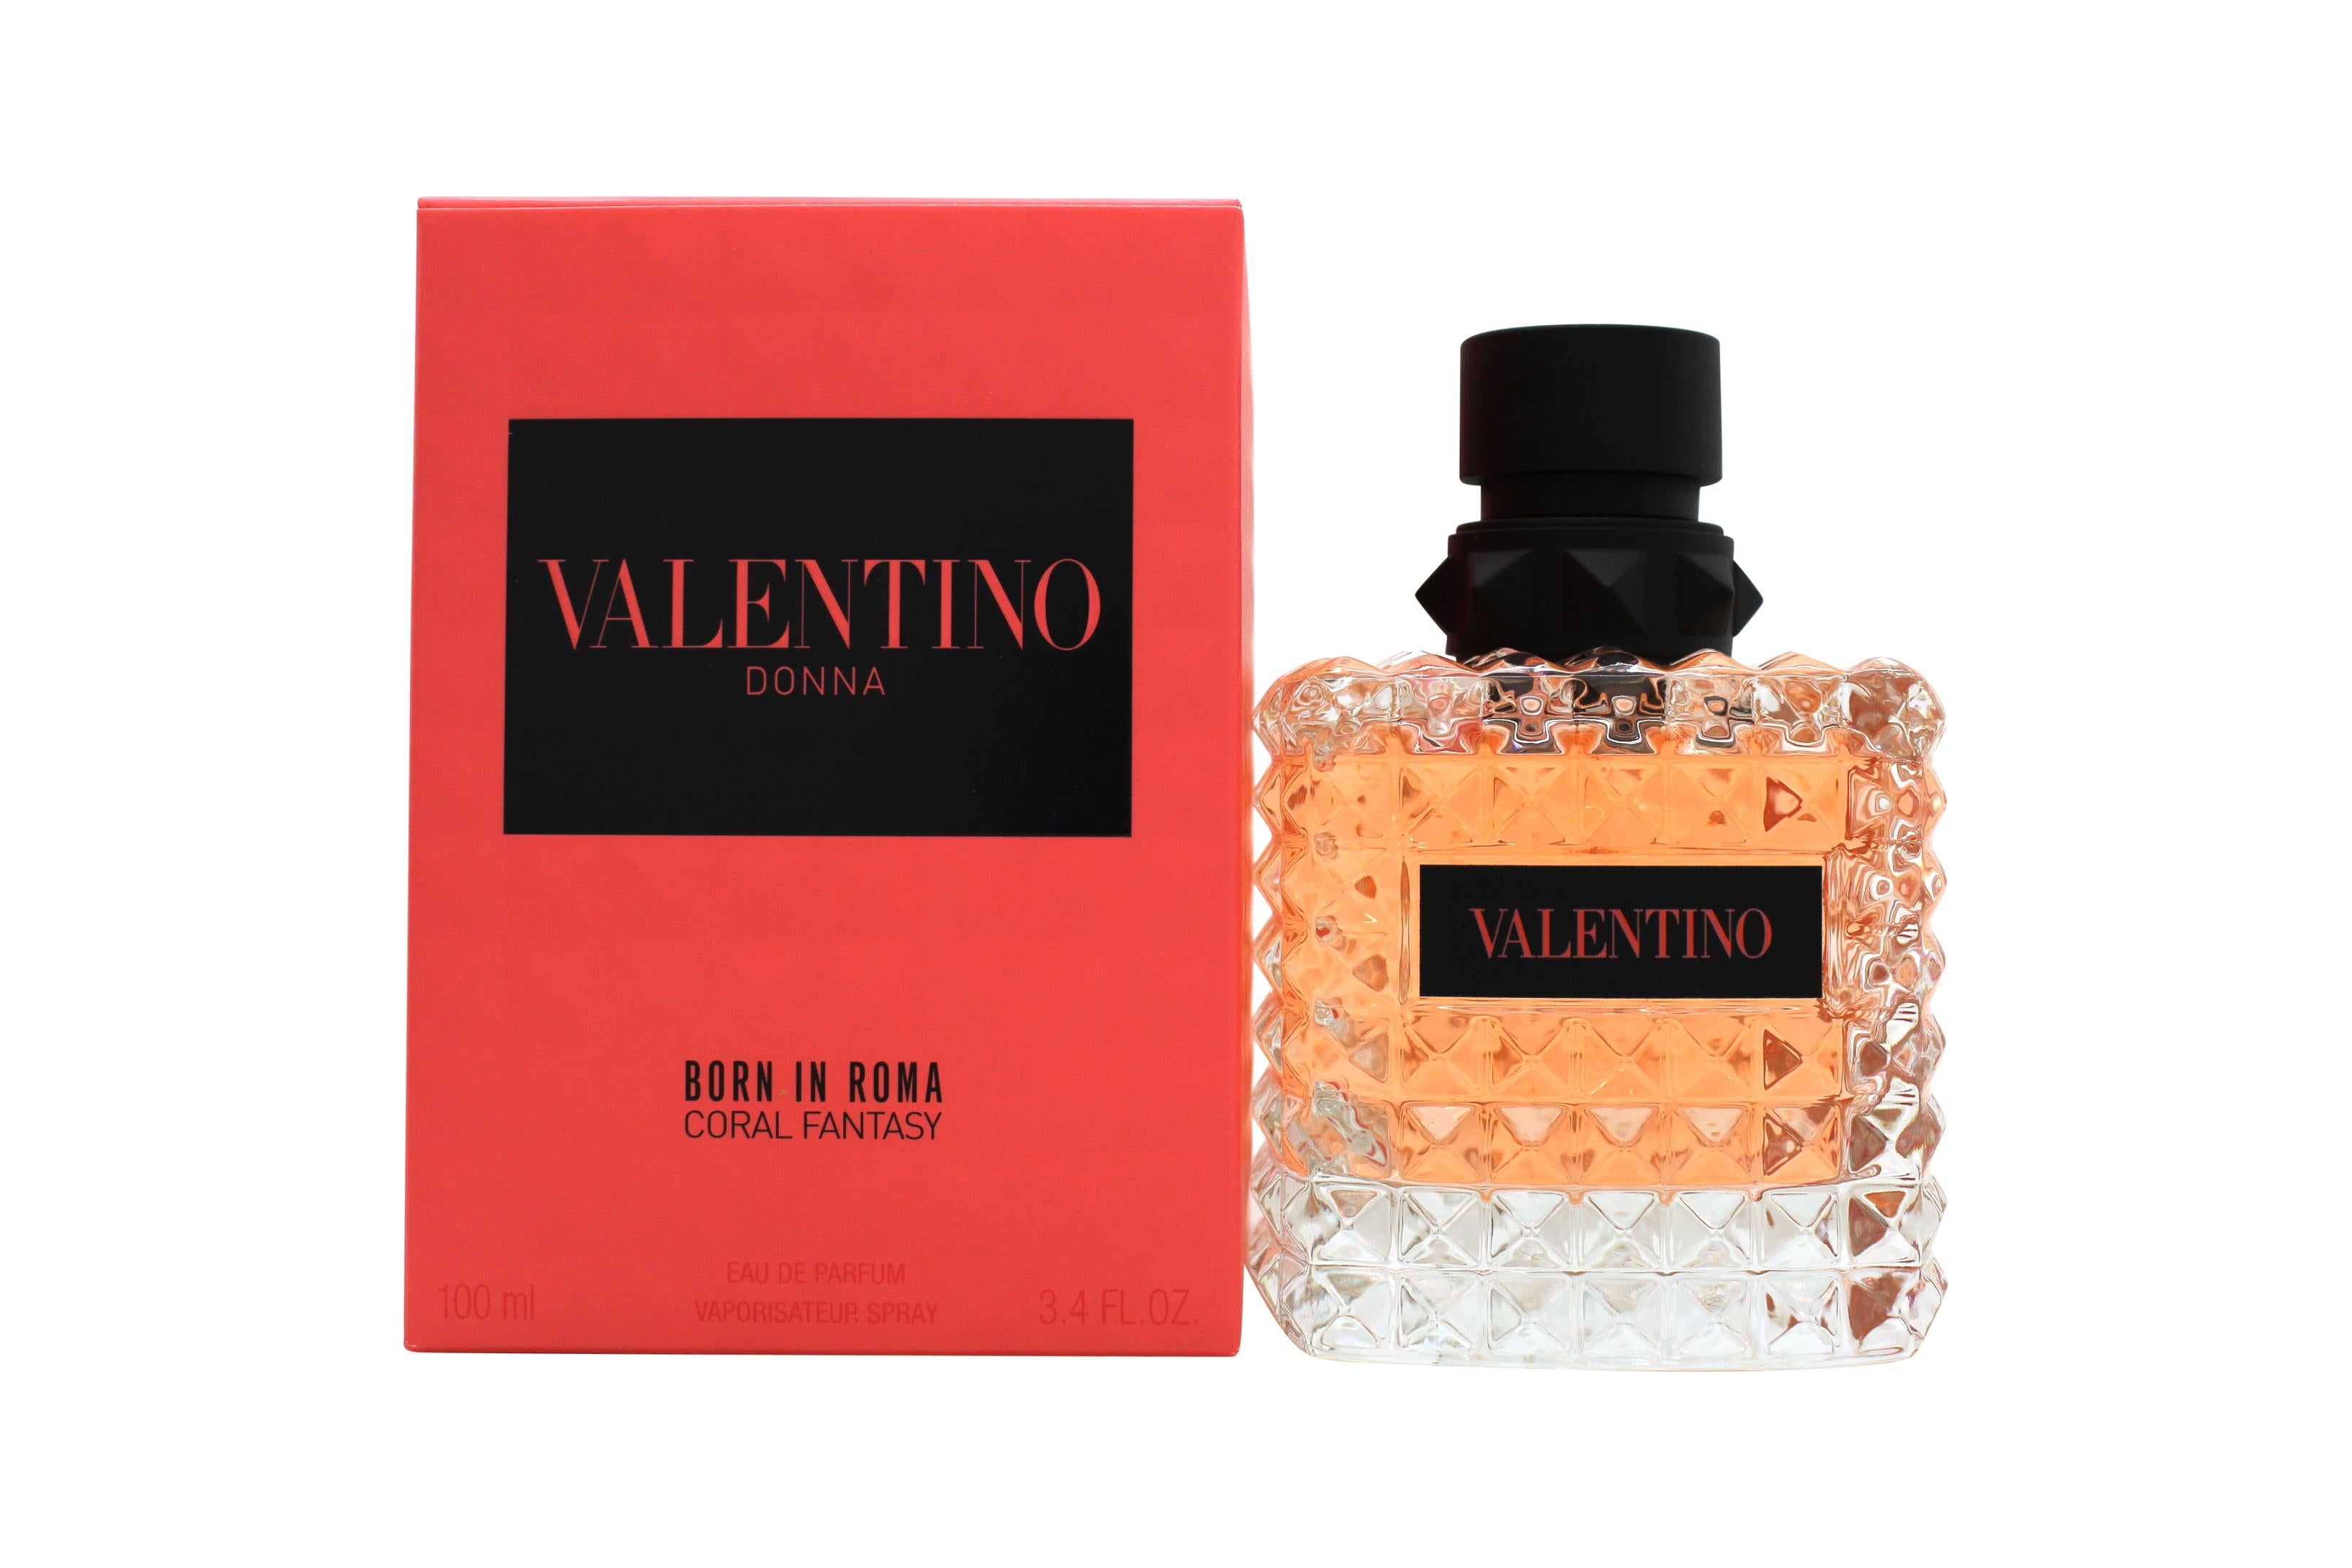 View Valentino Donna Born In Roma Coral Fantasy Eau de Parfum 100ml Spray information